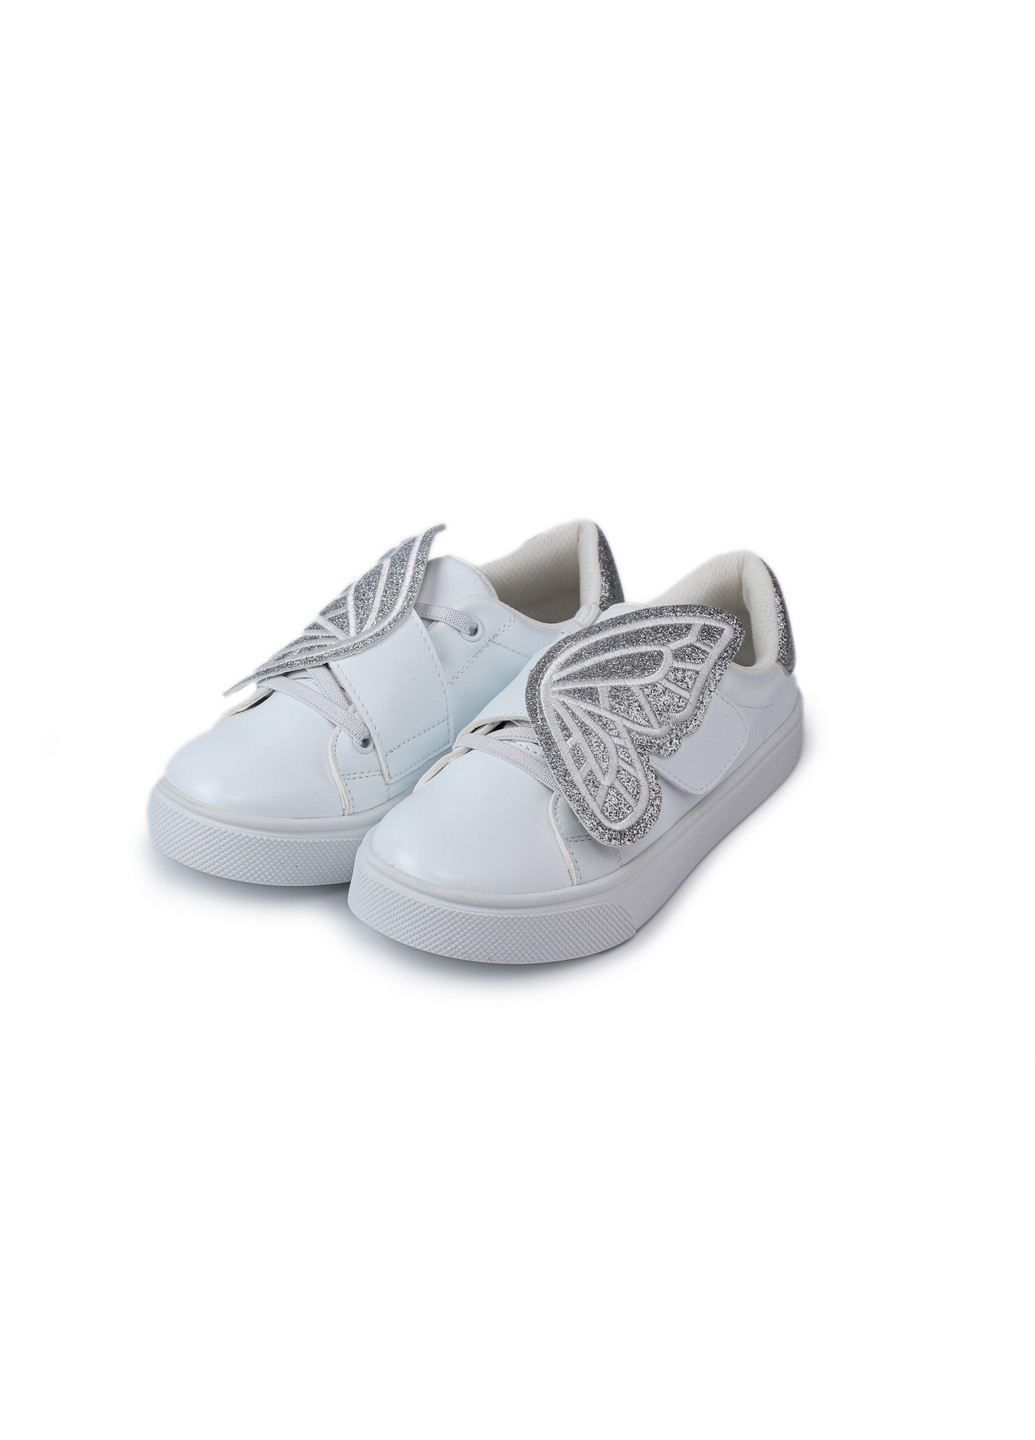 Белые кроссовки 202001dwhite-silver 36 бело-серебристый (2000903194989) Erra